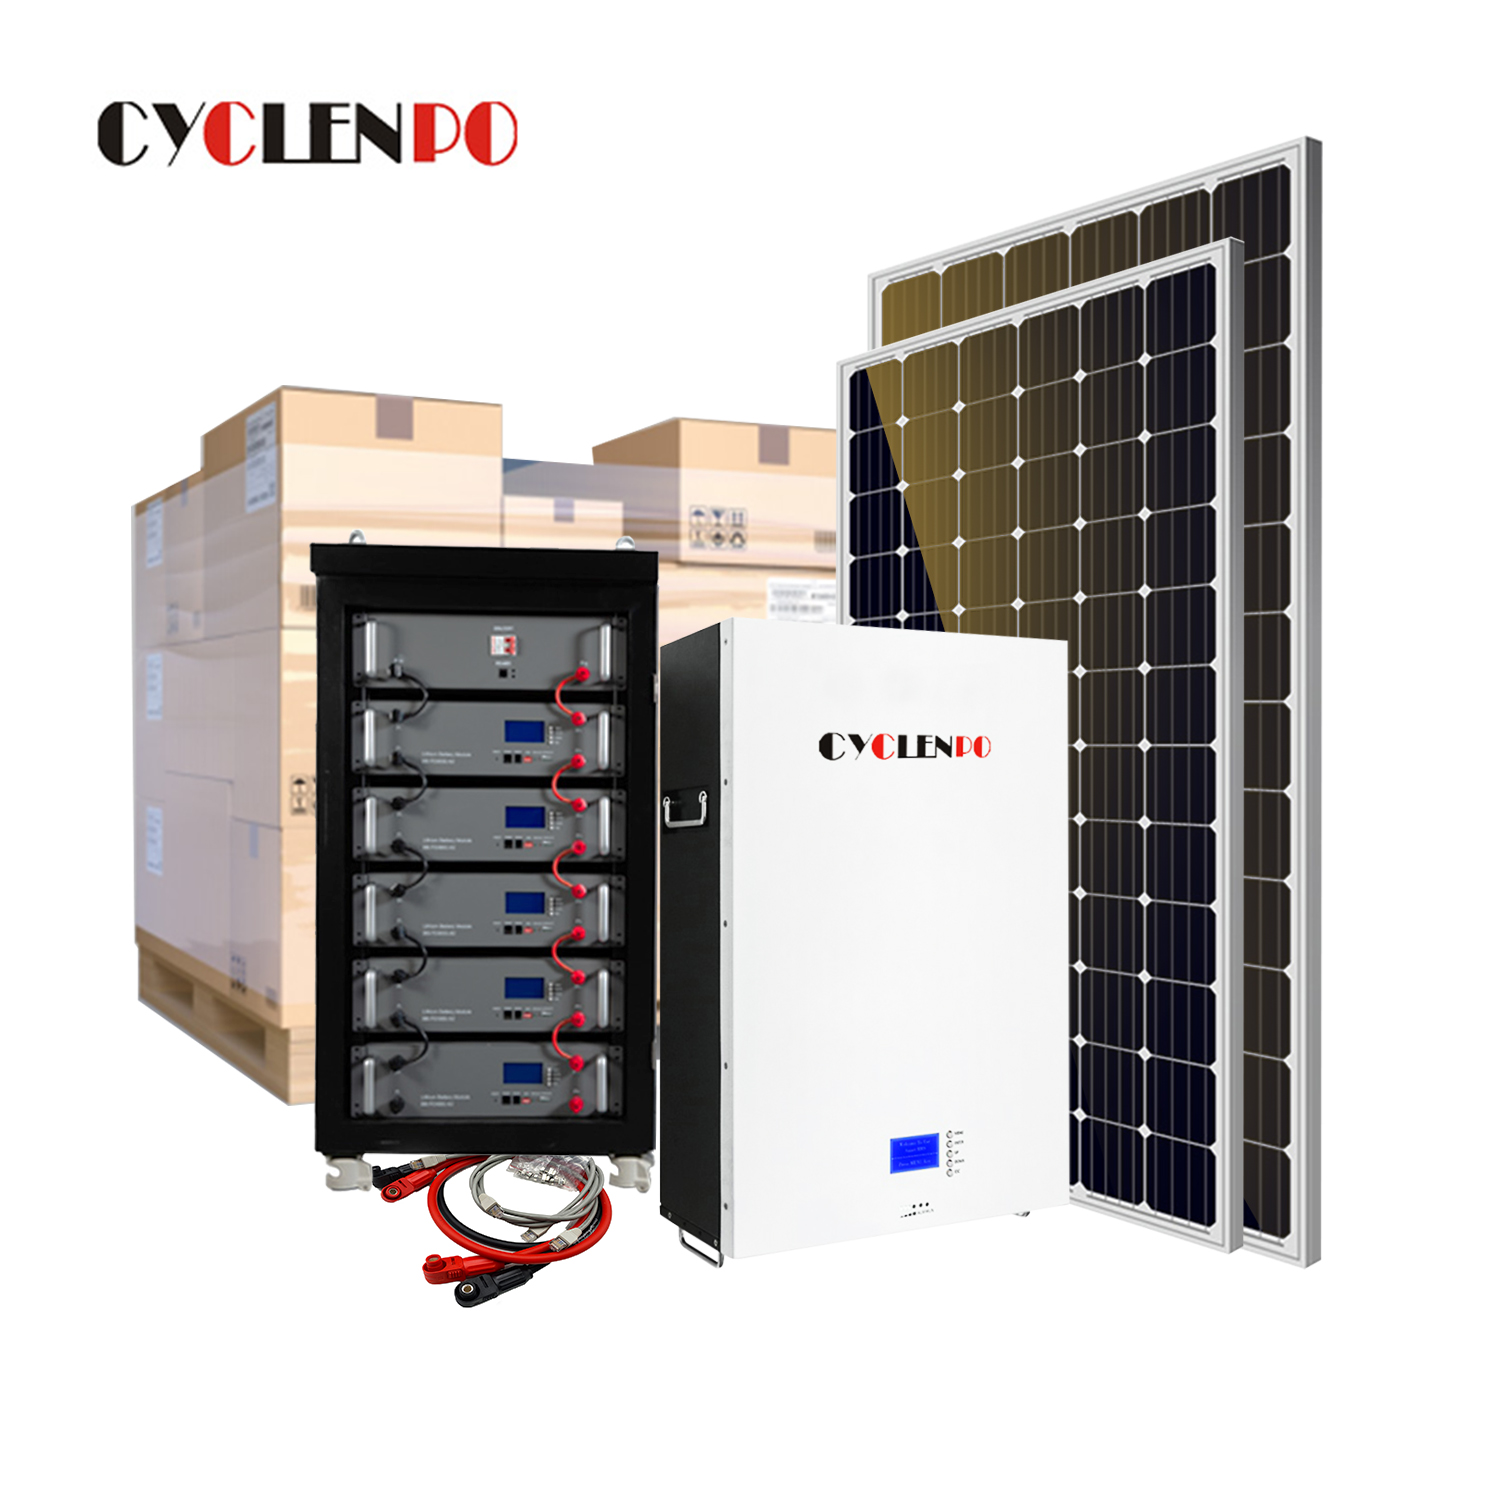 Fora da rede 5kwh Lifepo4 48V 100Ah Home Solar Battey Powerwall